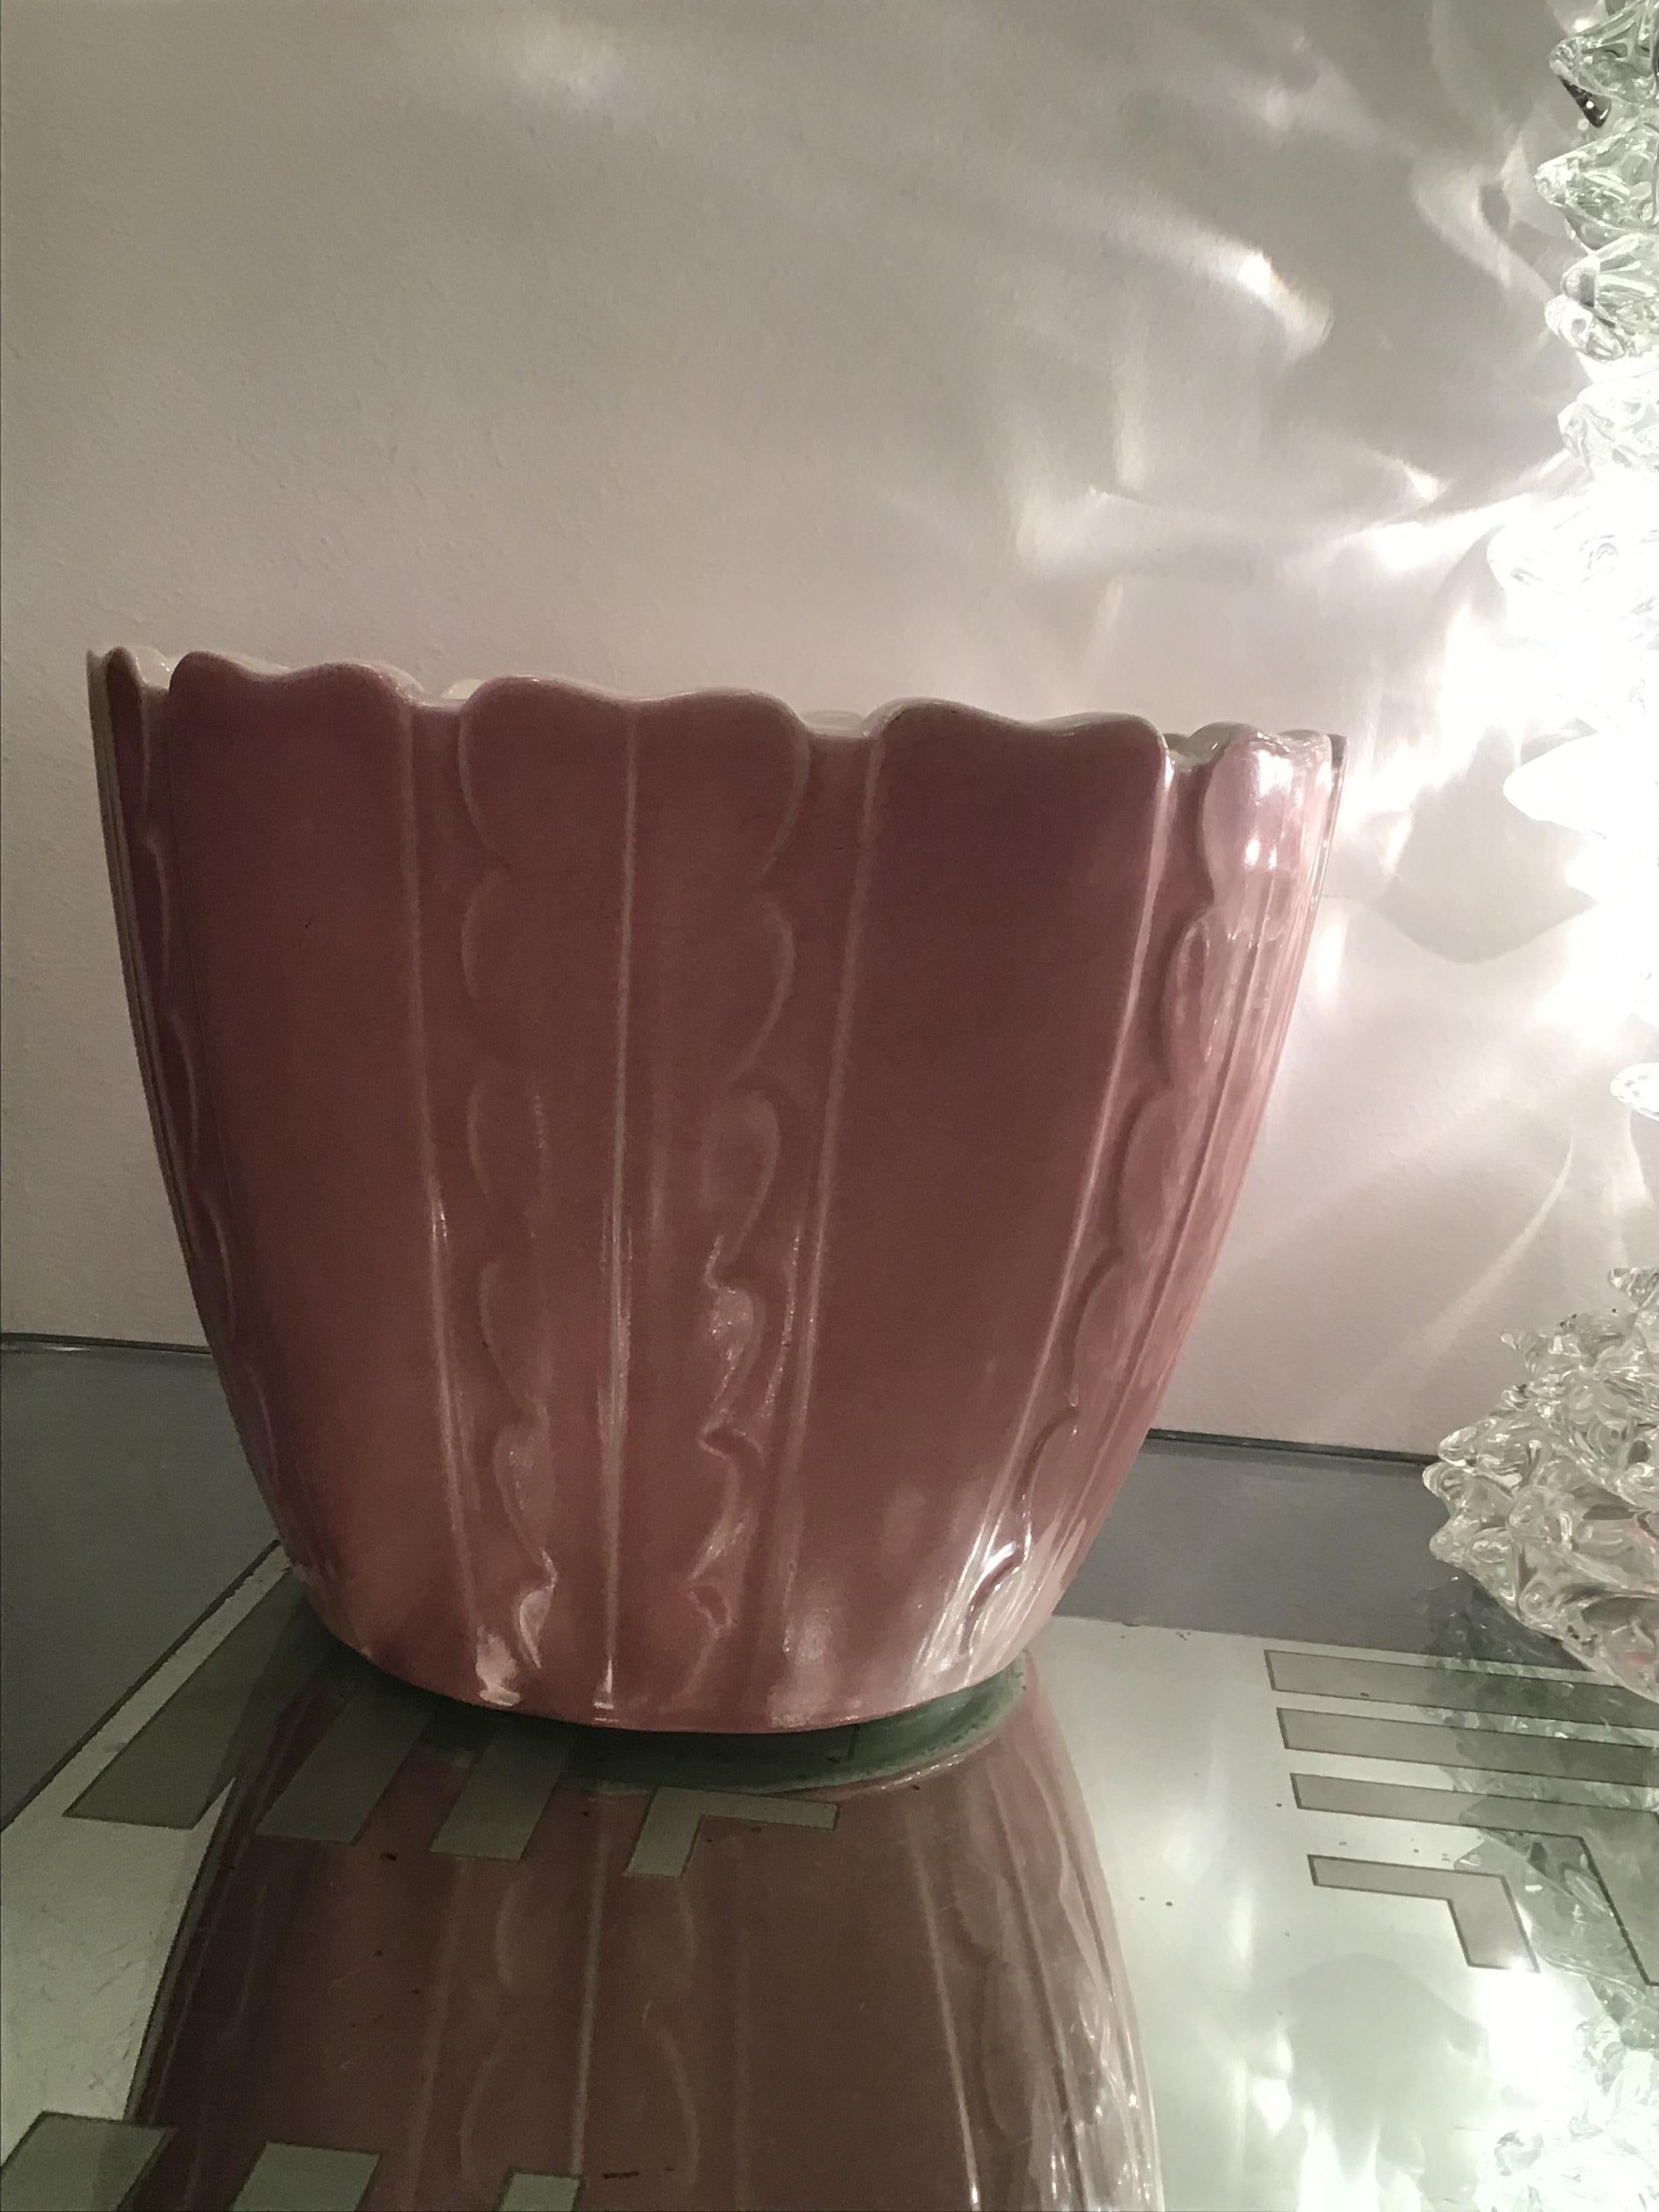 Richard Ginori Giovanni Gariboldi Vase Ceramic 1950, Italy For Sale 9